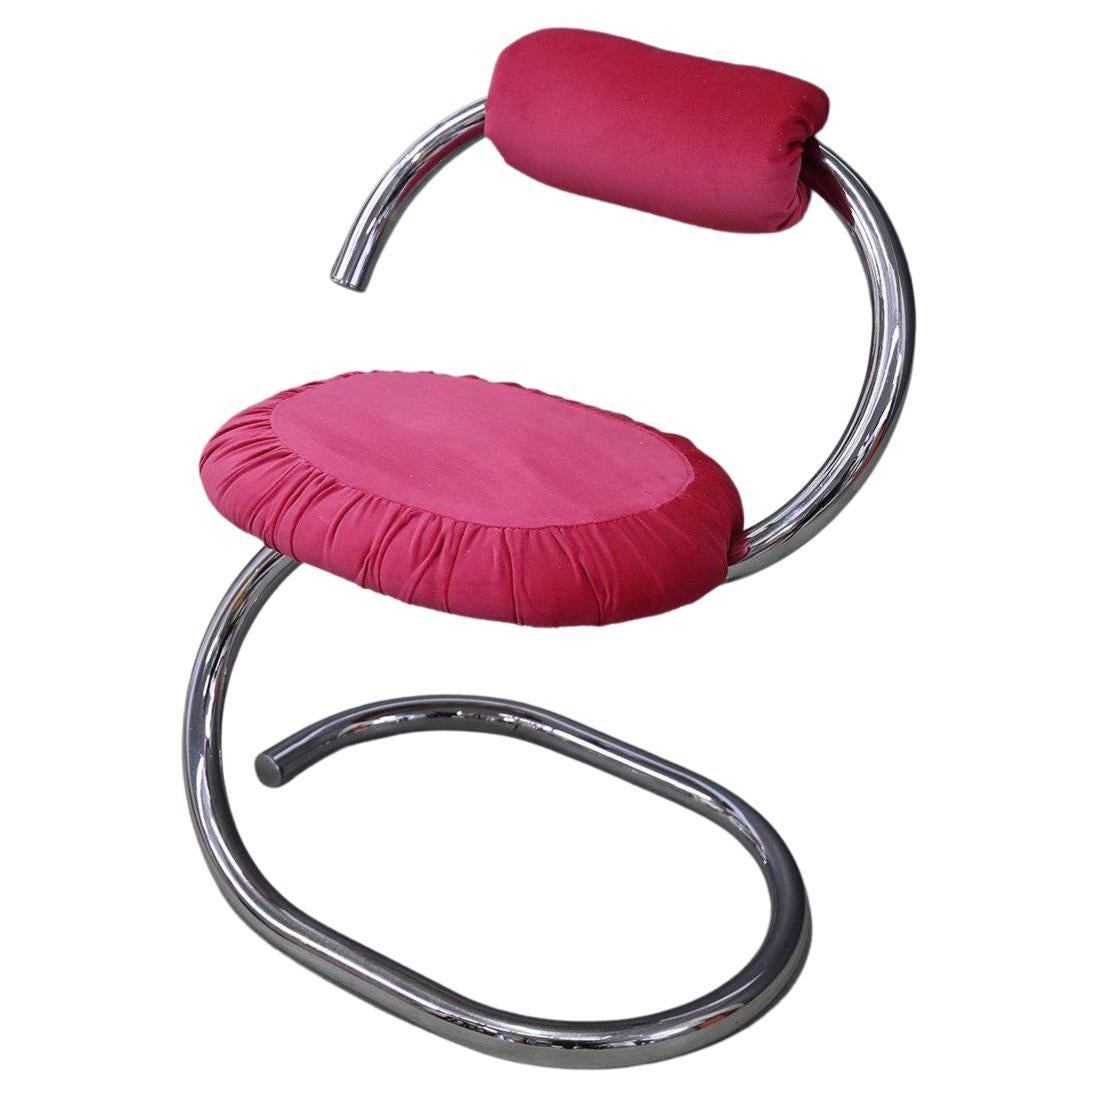 Giotto Stoppino, Cobra / Spirale Stühle im Angebot